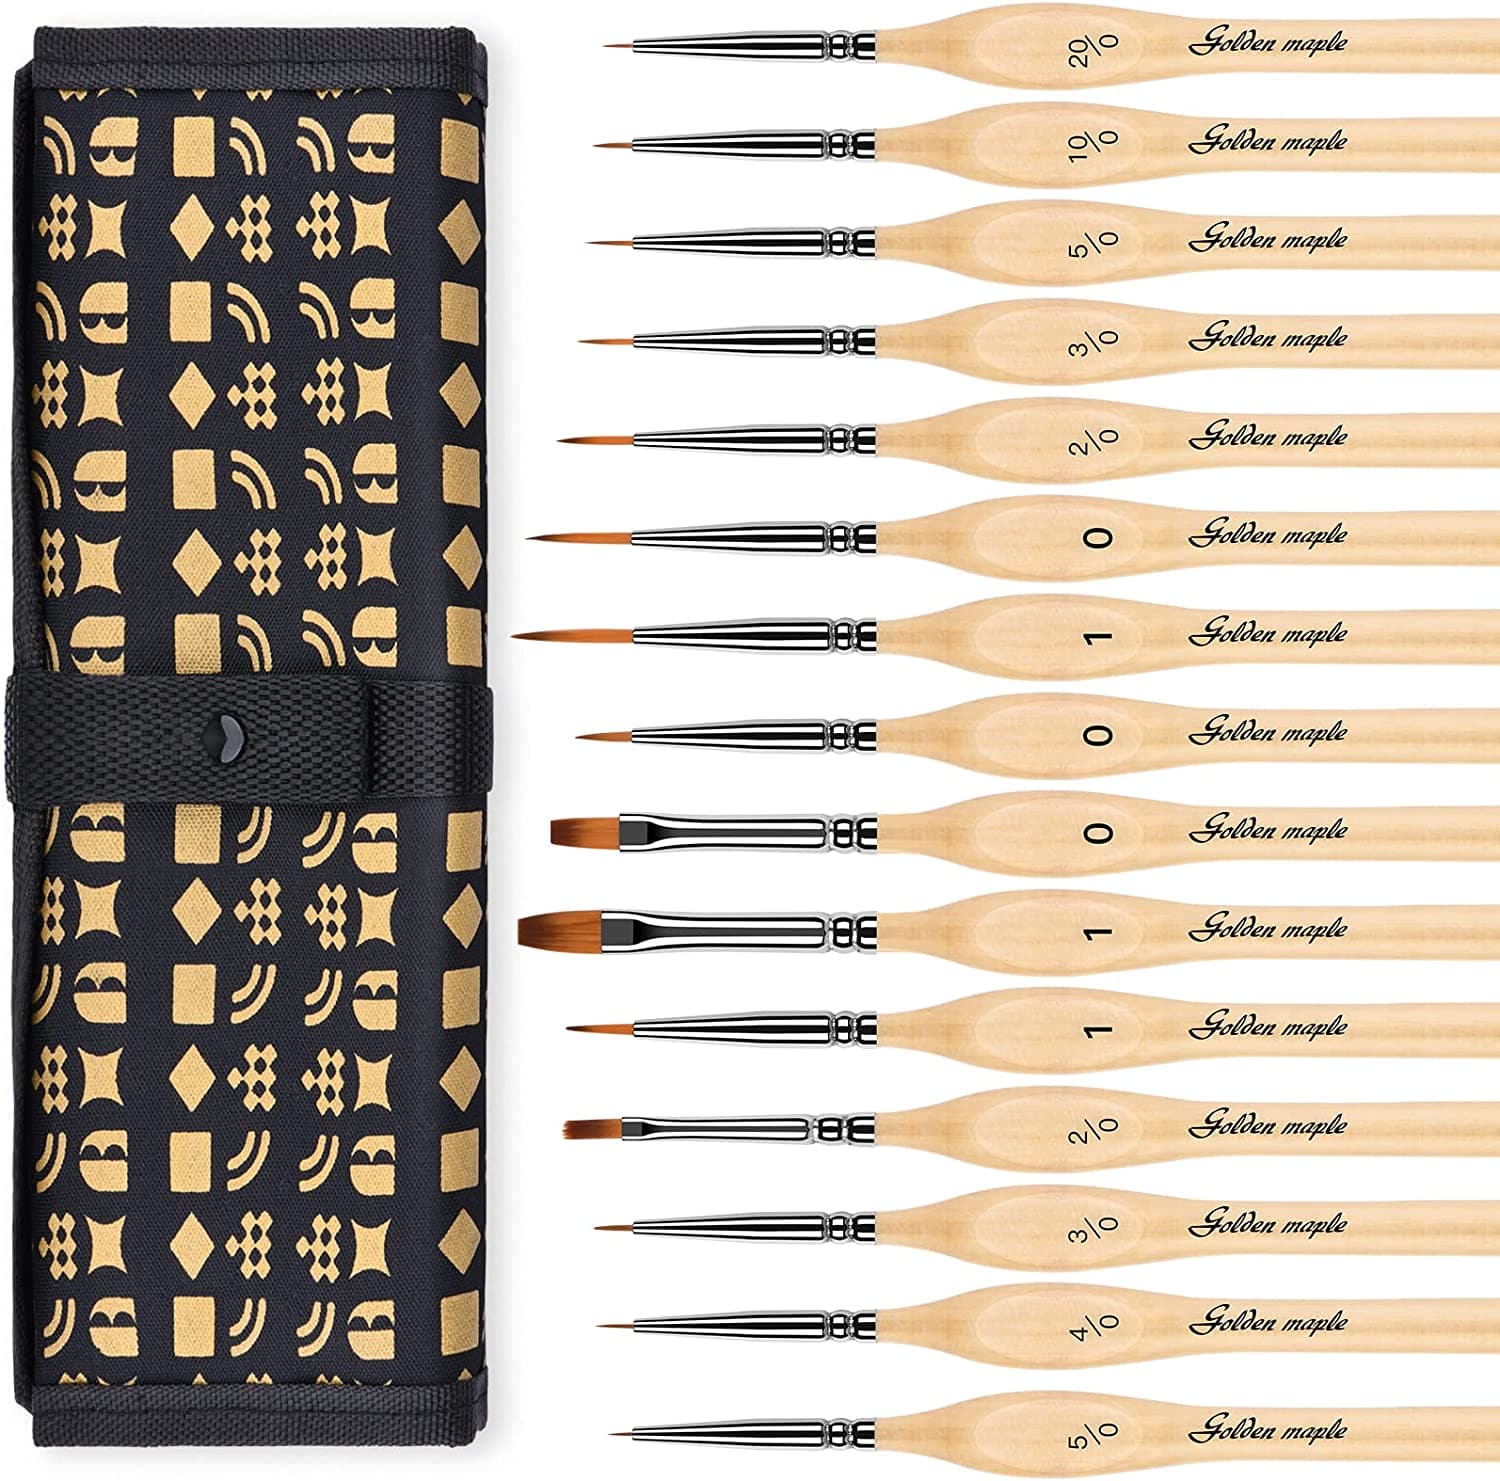 Golden Maple 10PCS Nylon/Sable Miniature Paint Brushes Set (H58